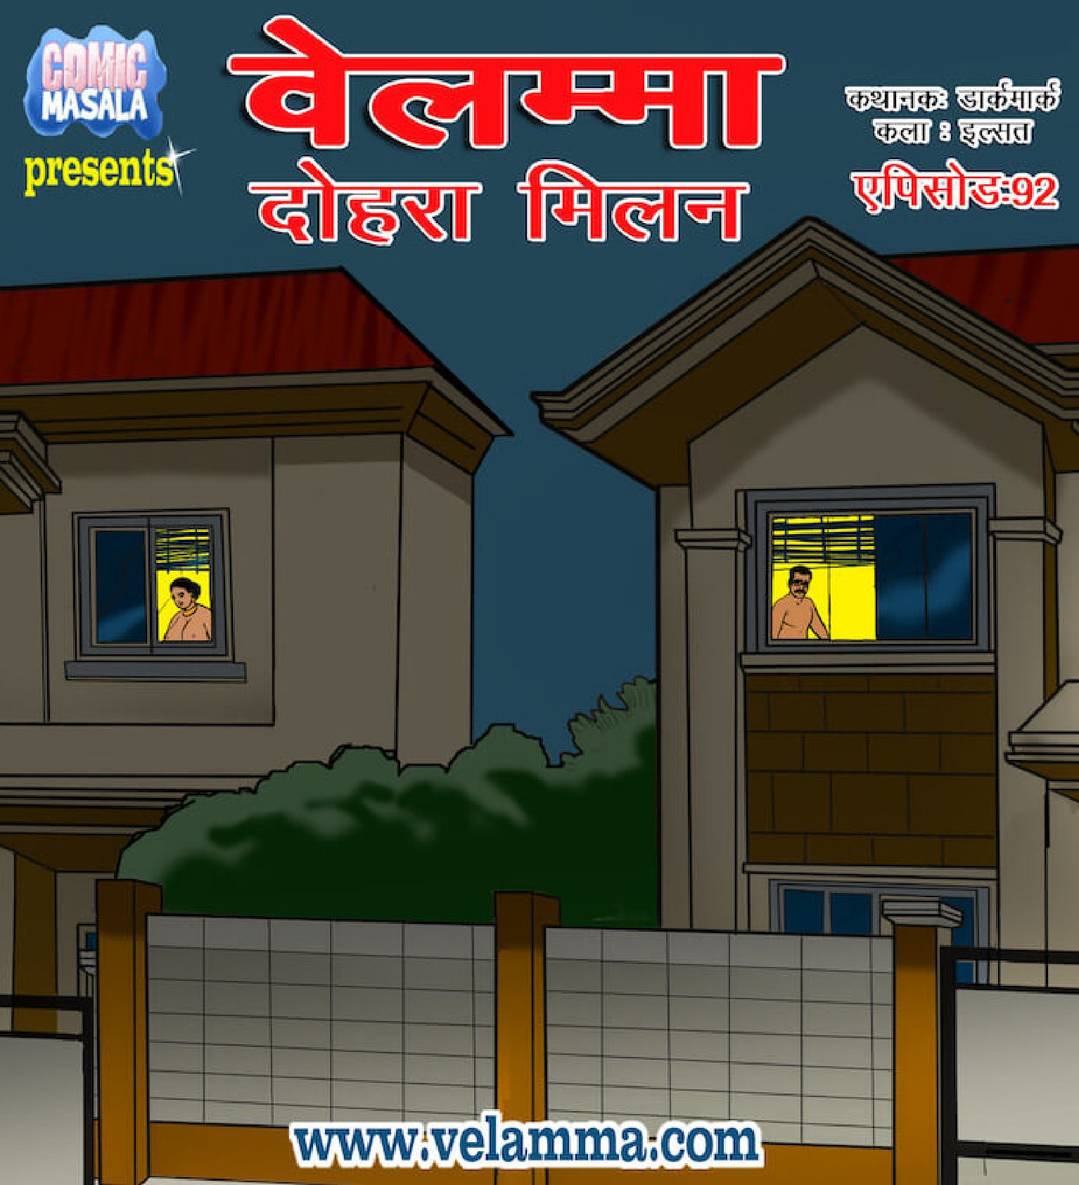 Velamma Episode 92 Hindi – Dohra milan (दोहरा मिलन) - 35 - FSIComics